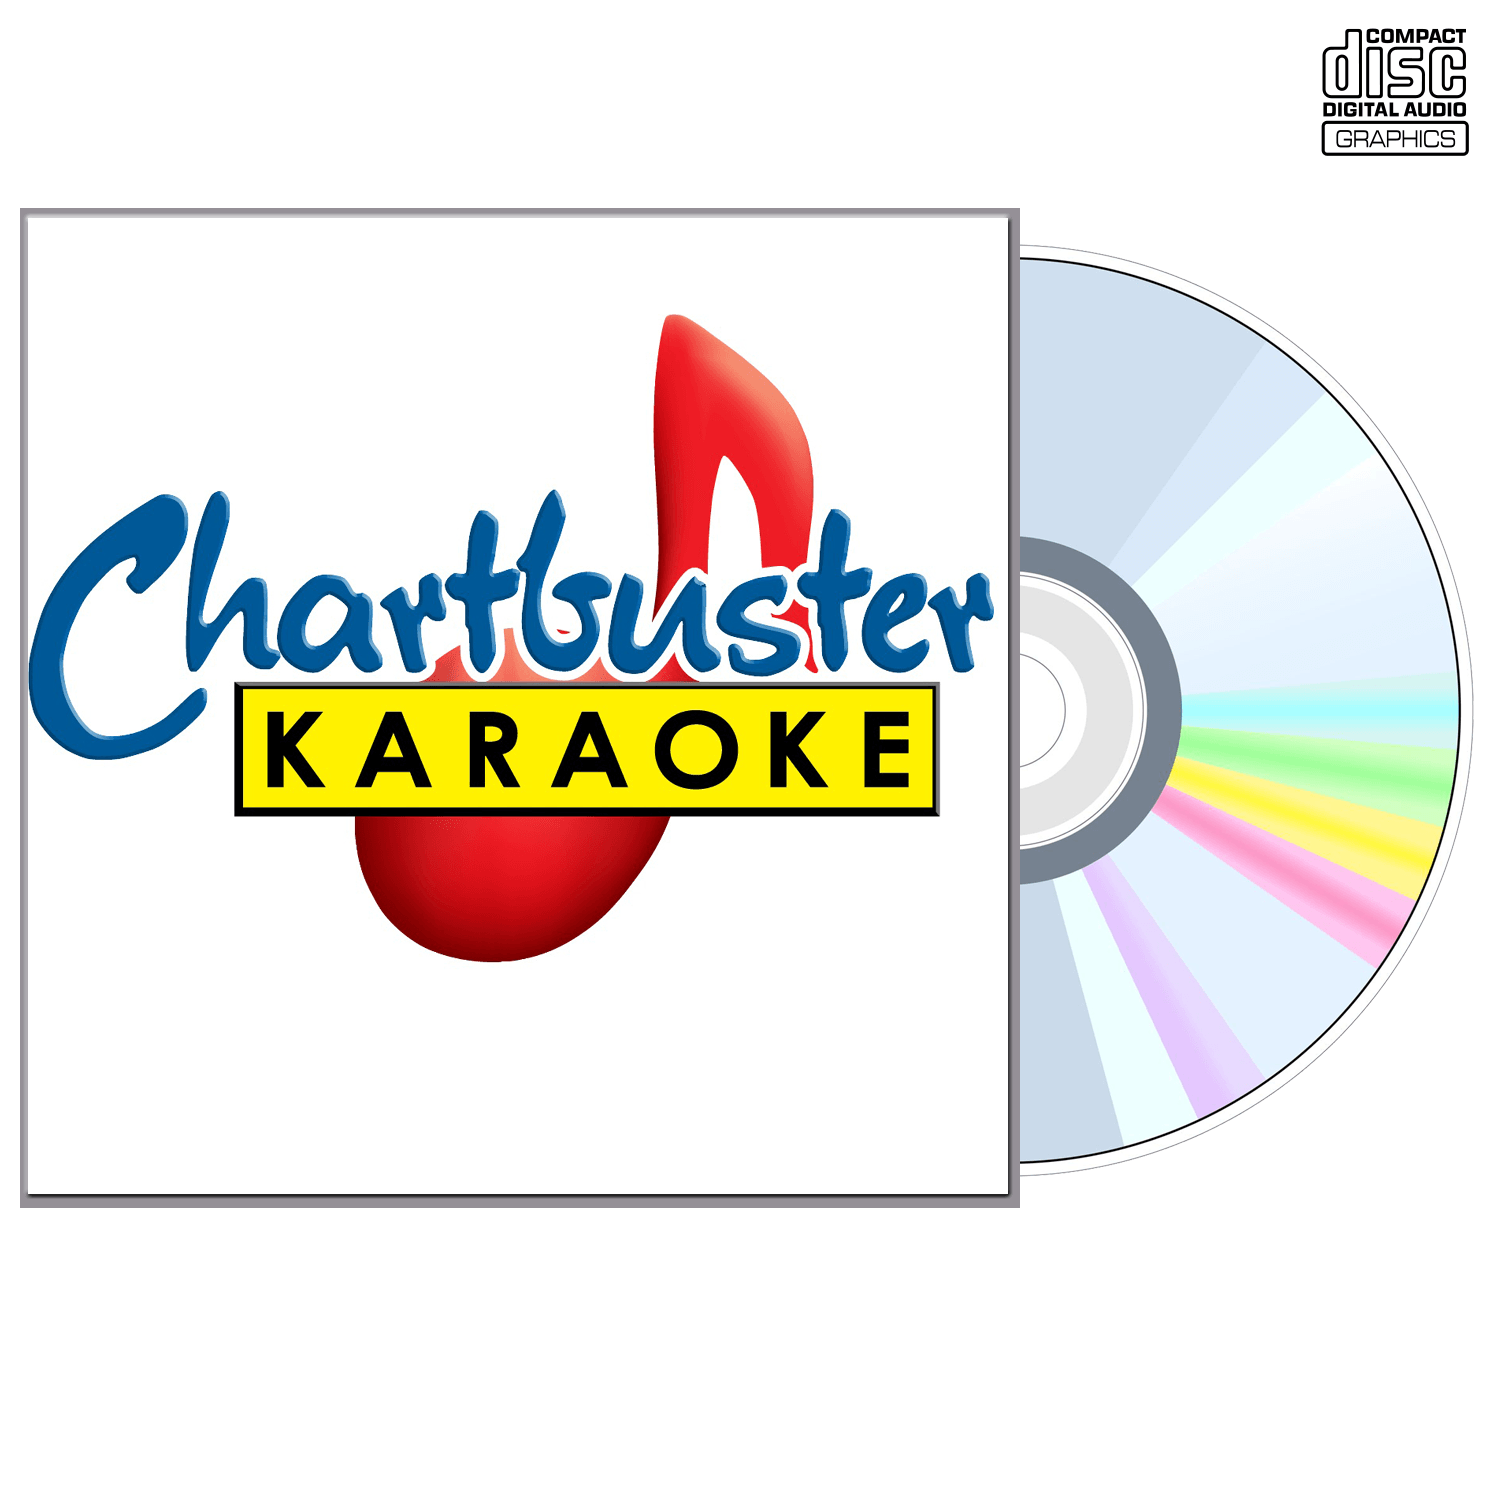 Best Of Charley Pride - CD+G - Chartbuster Karaoke - Karaoke Home Entertainment